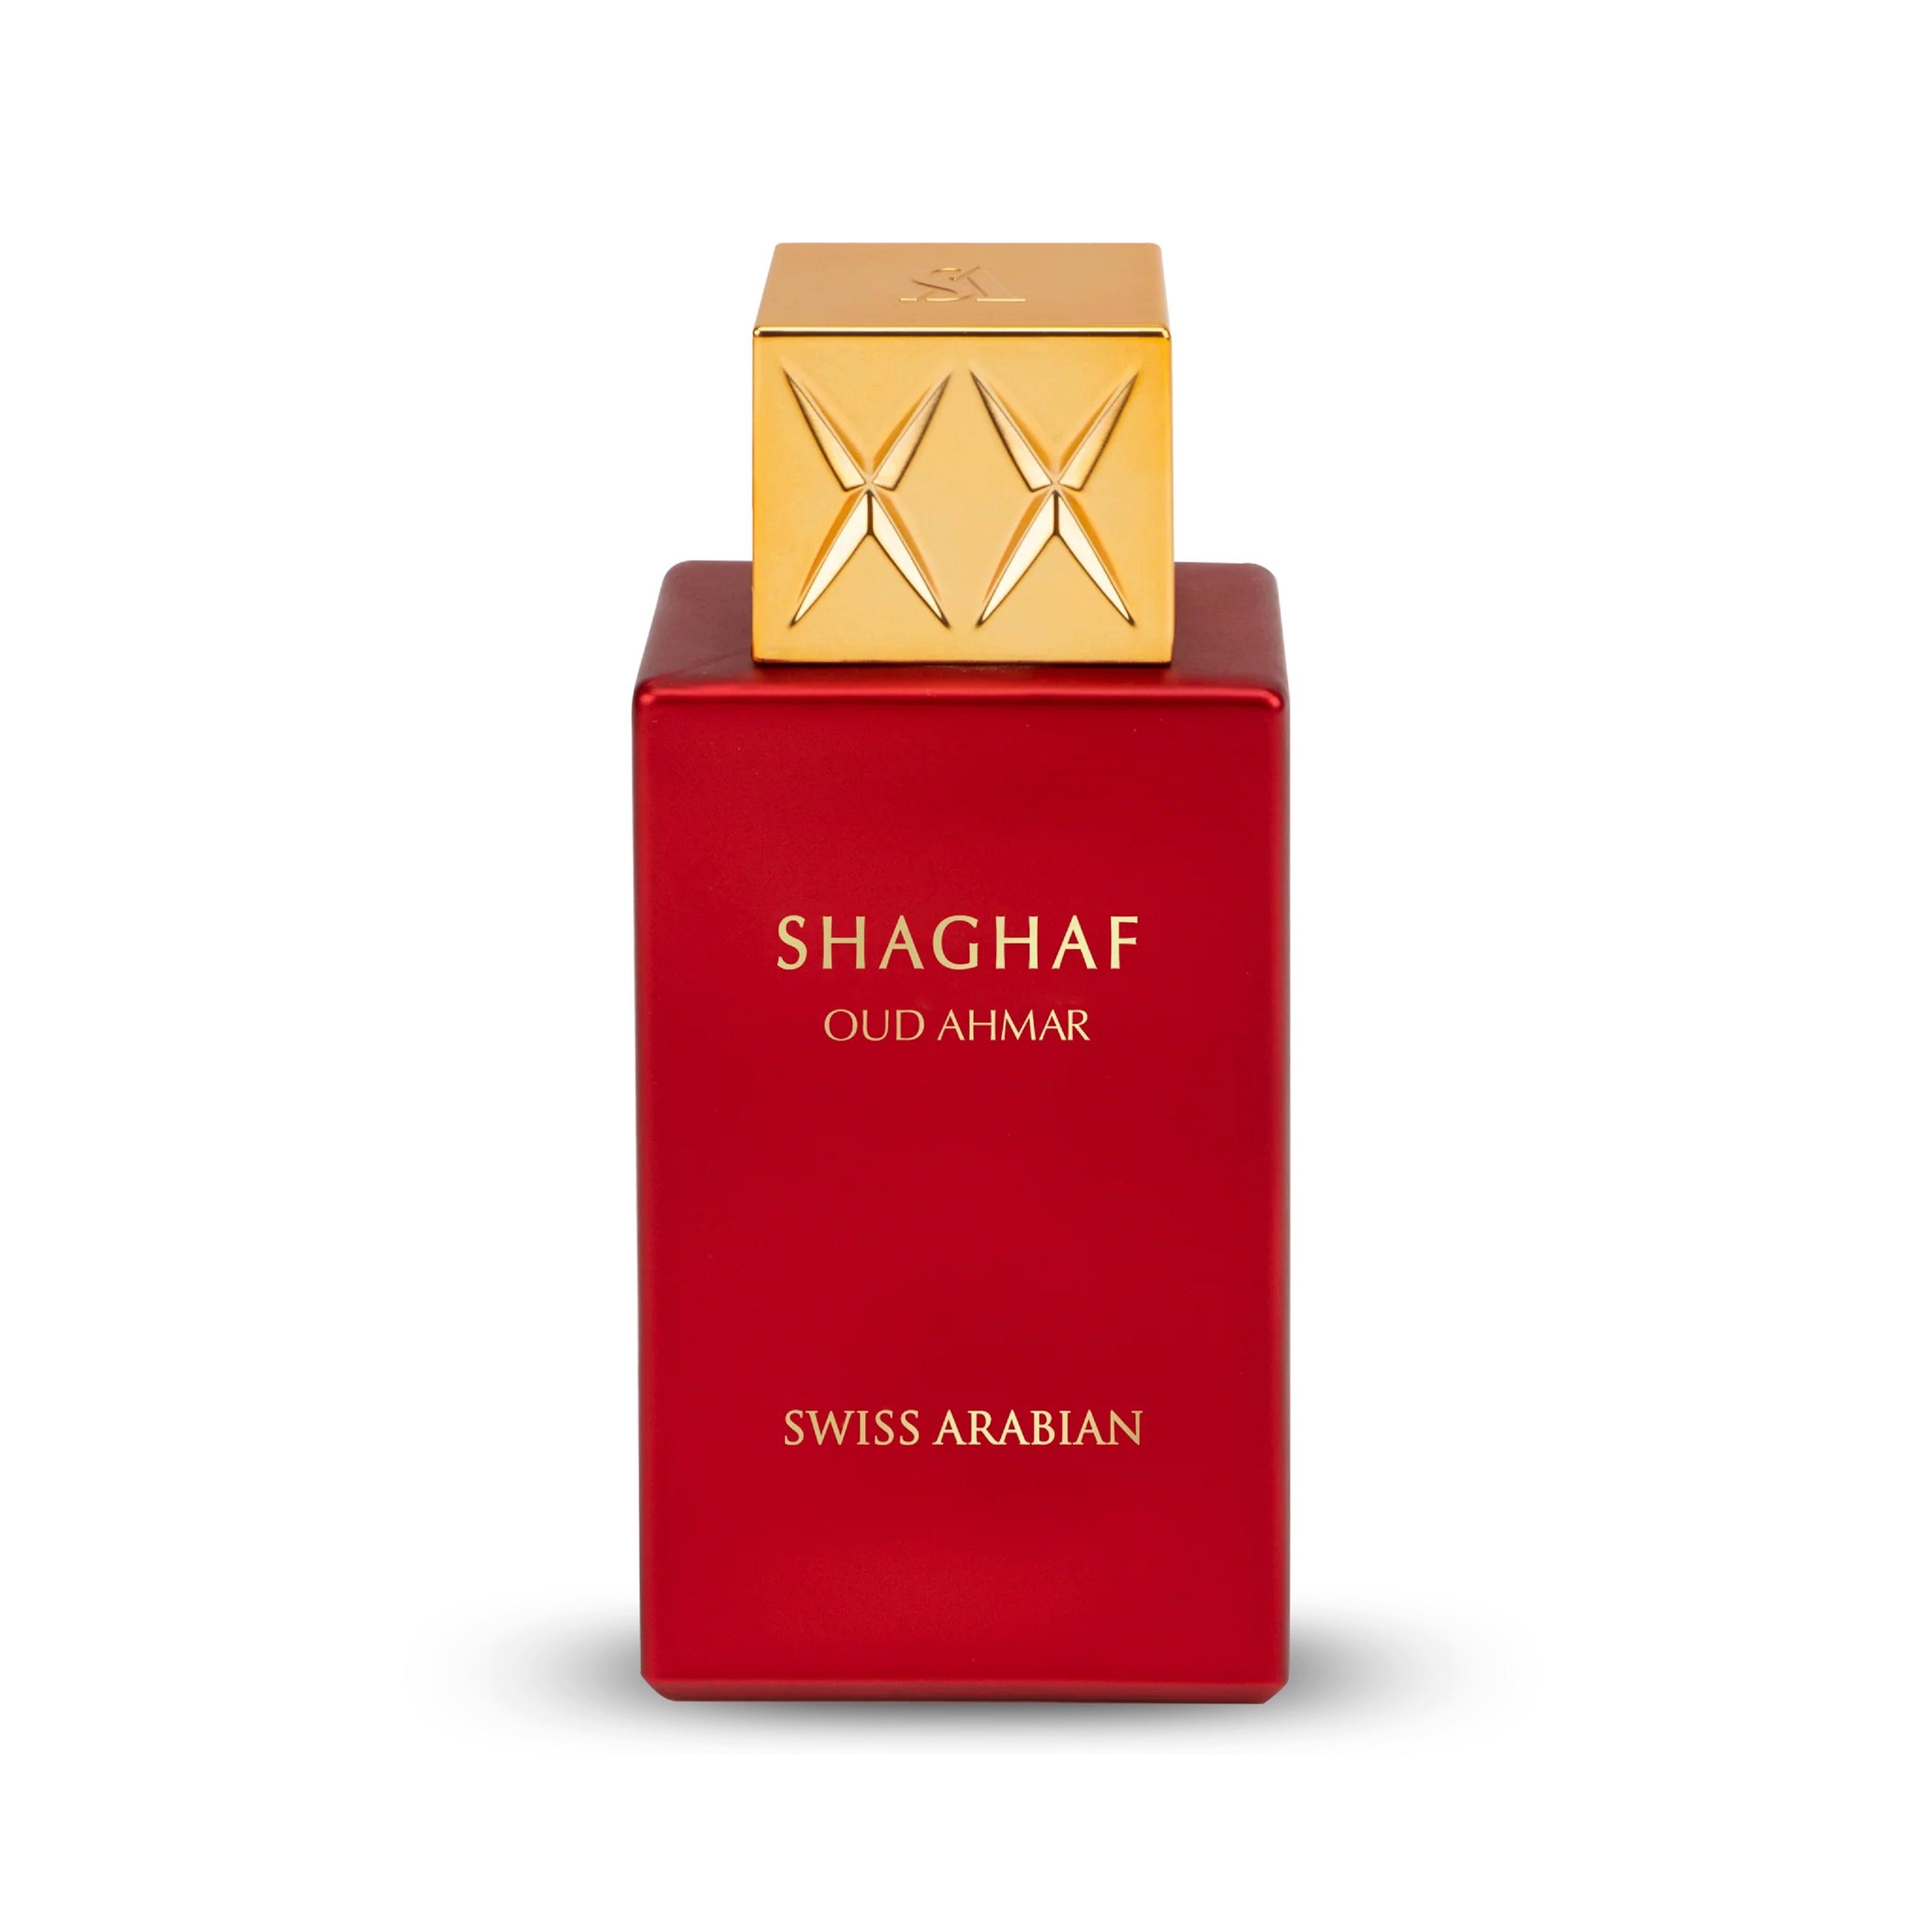 Edition Arabian Swiss AHMAR Eau de 75ml Arabian Shaghaf Oud Eau Swiss Parfum Limited de Parfum